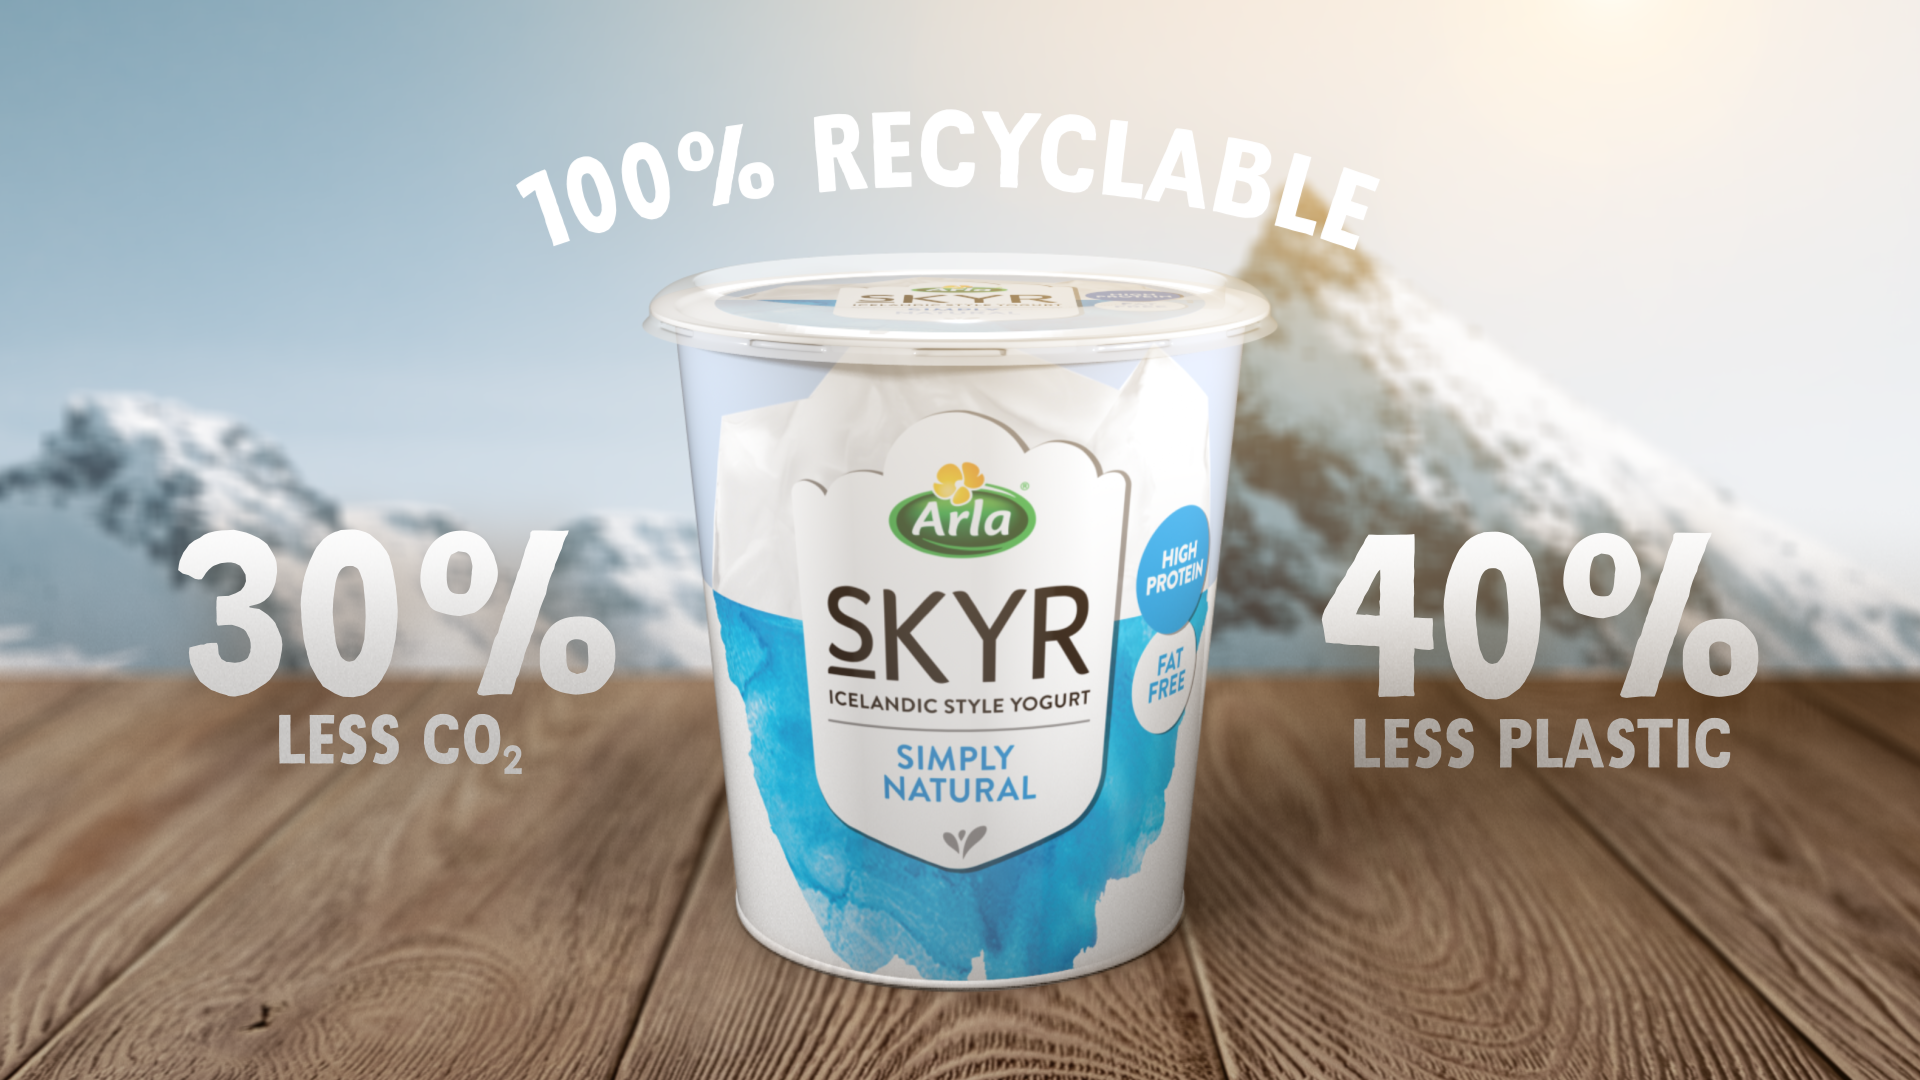 New skyr bucket reduces plastic by 40 percent | Arla